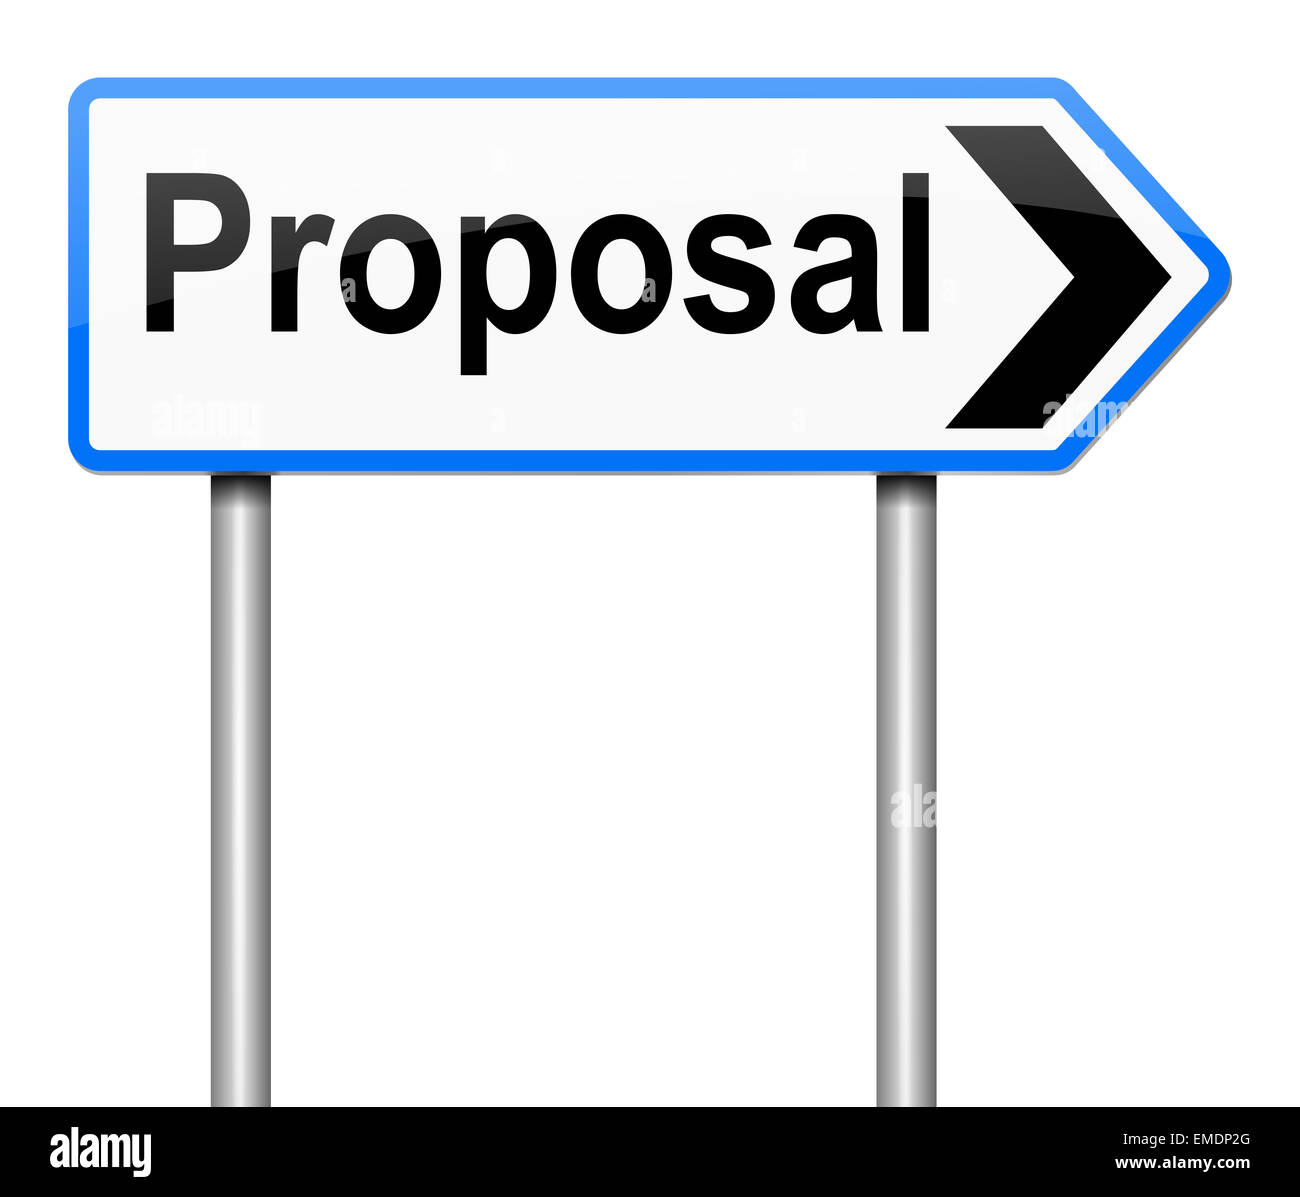 Proposal concept. Stock Photo